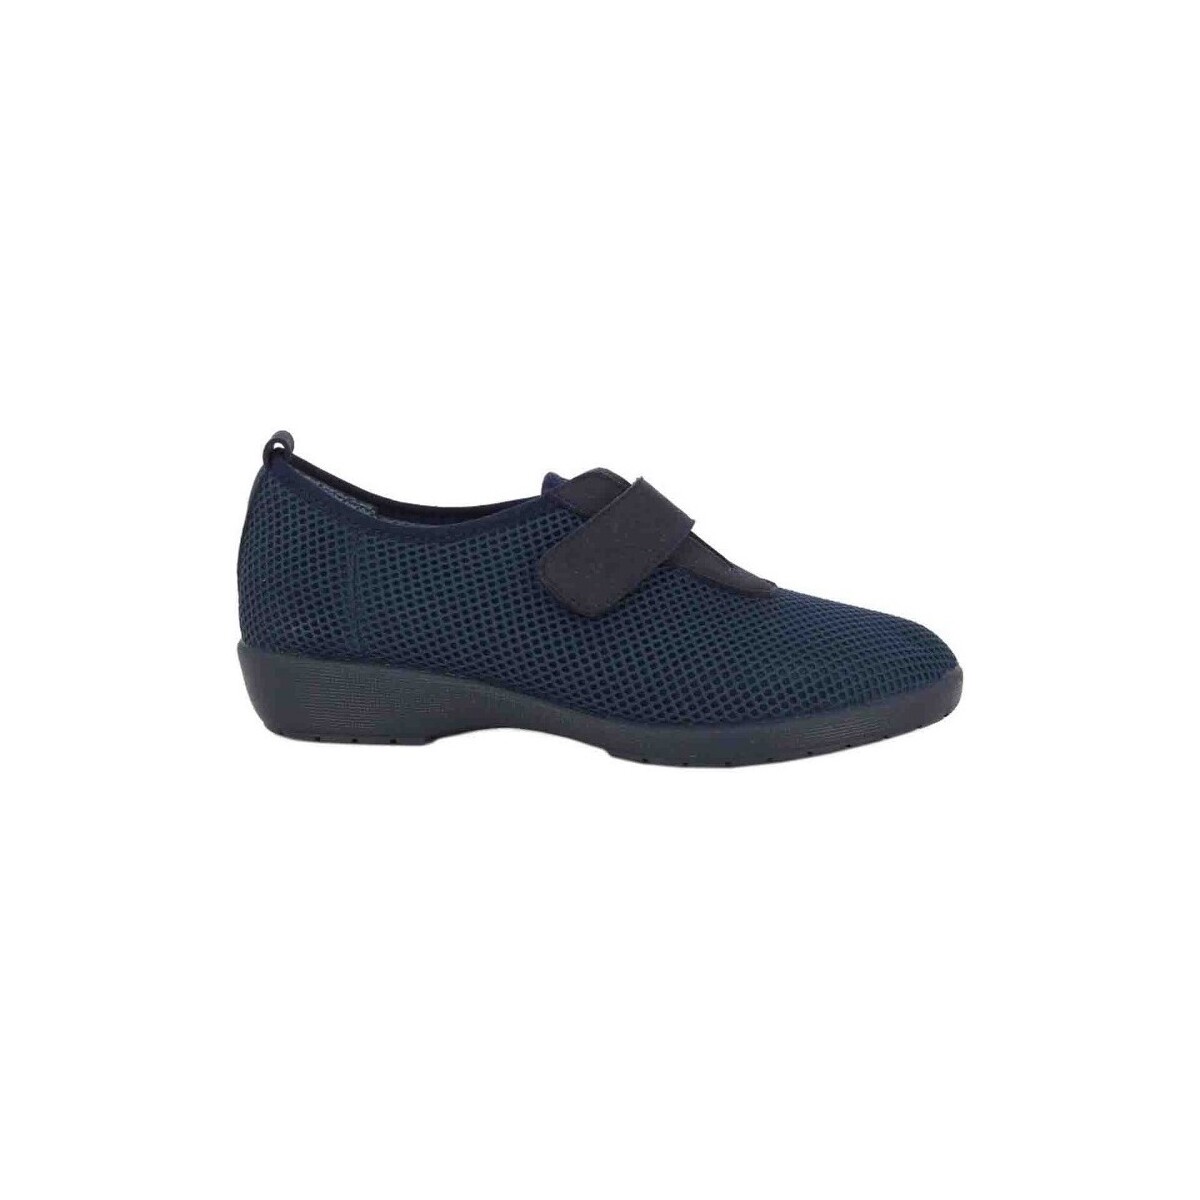 Schuhe Damen Derby-Schuhe Doctor Cutillas 41155 Blau